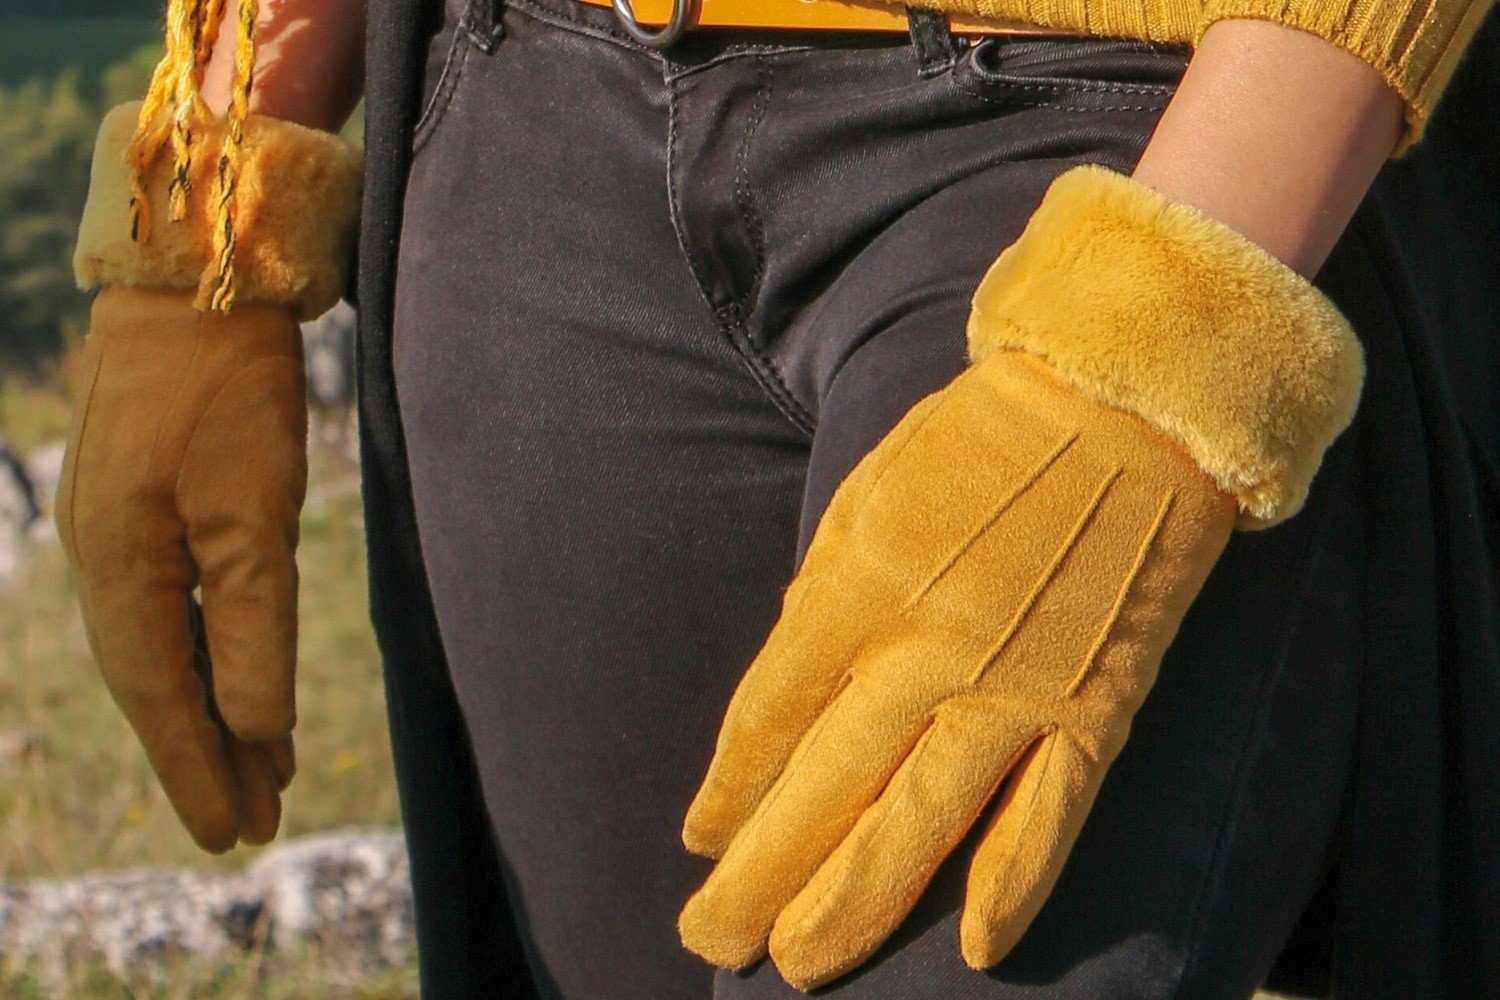 Handschuhe Unifarbene Fleecehandschuhe Touchscreen styleBREAKER Kunstfell mit Schwarz